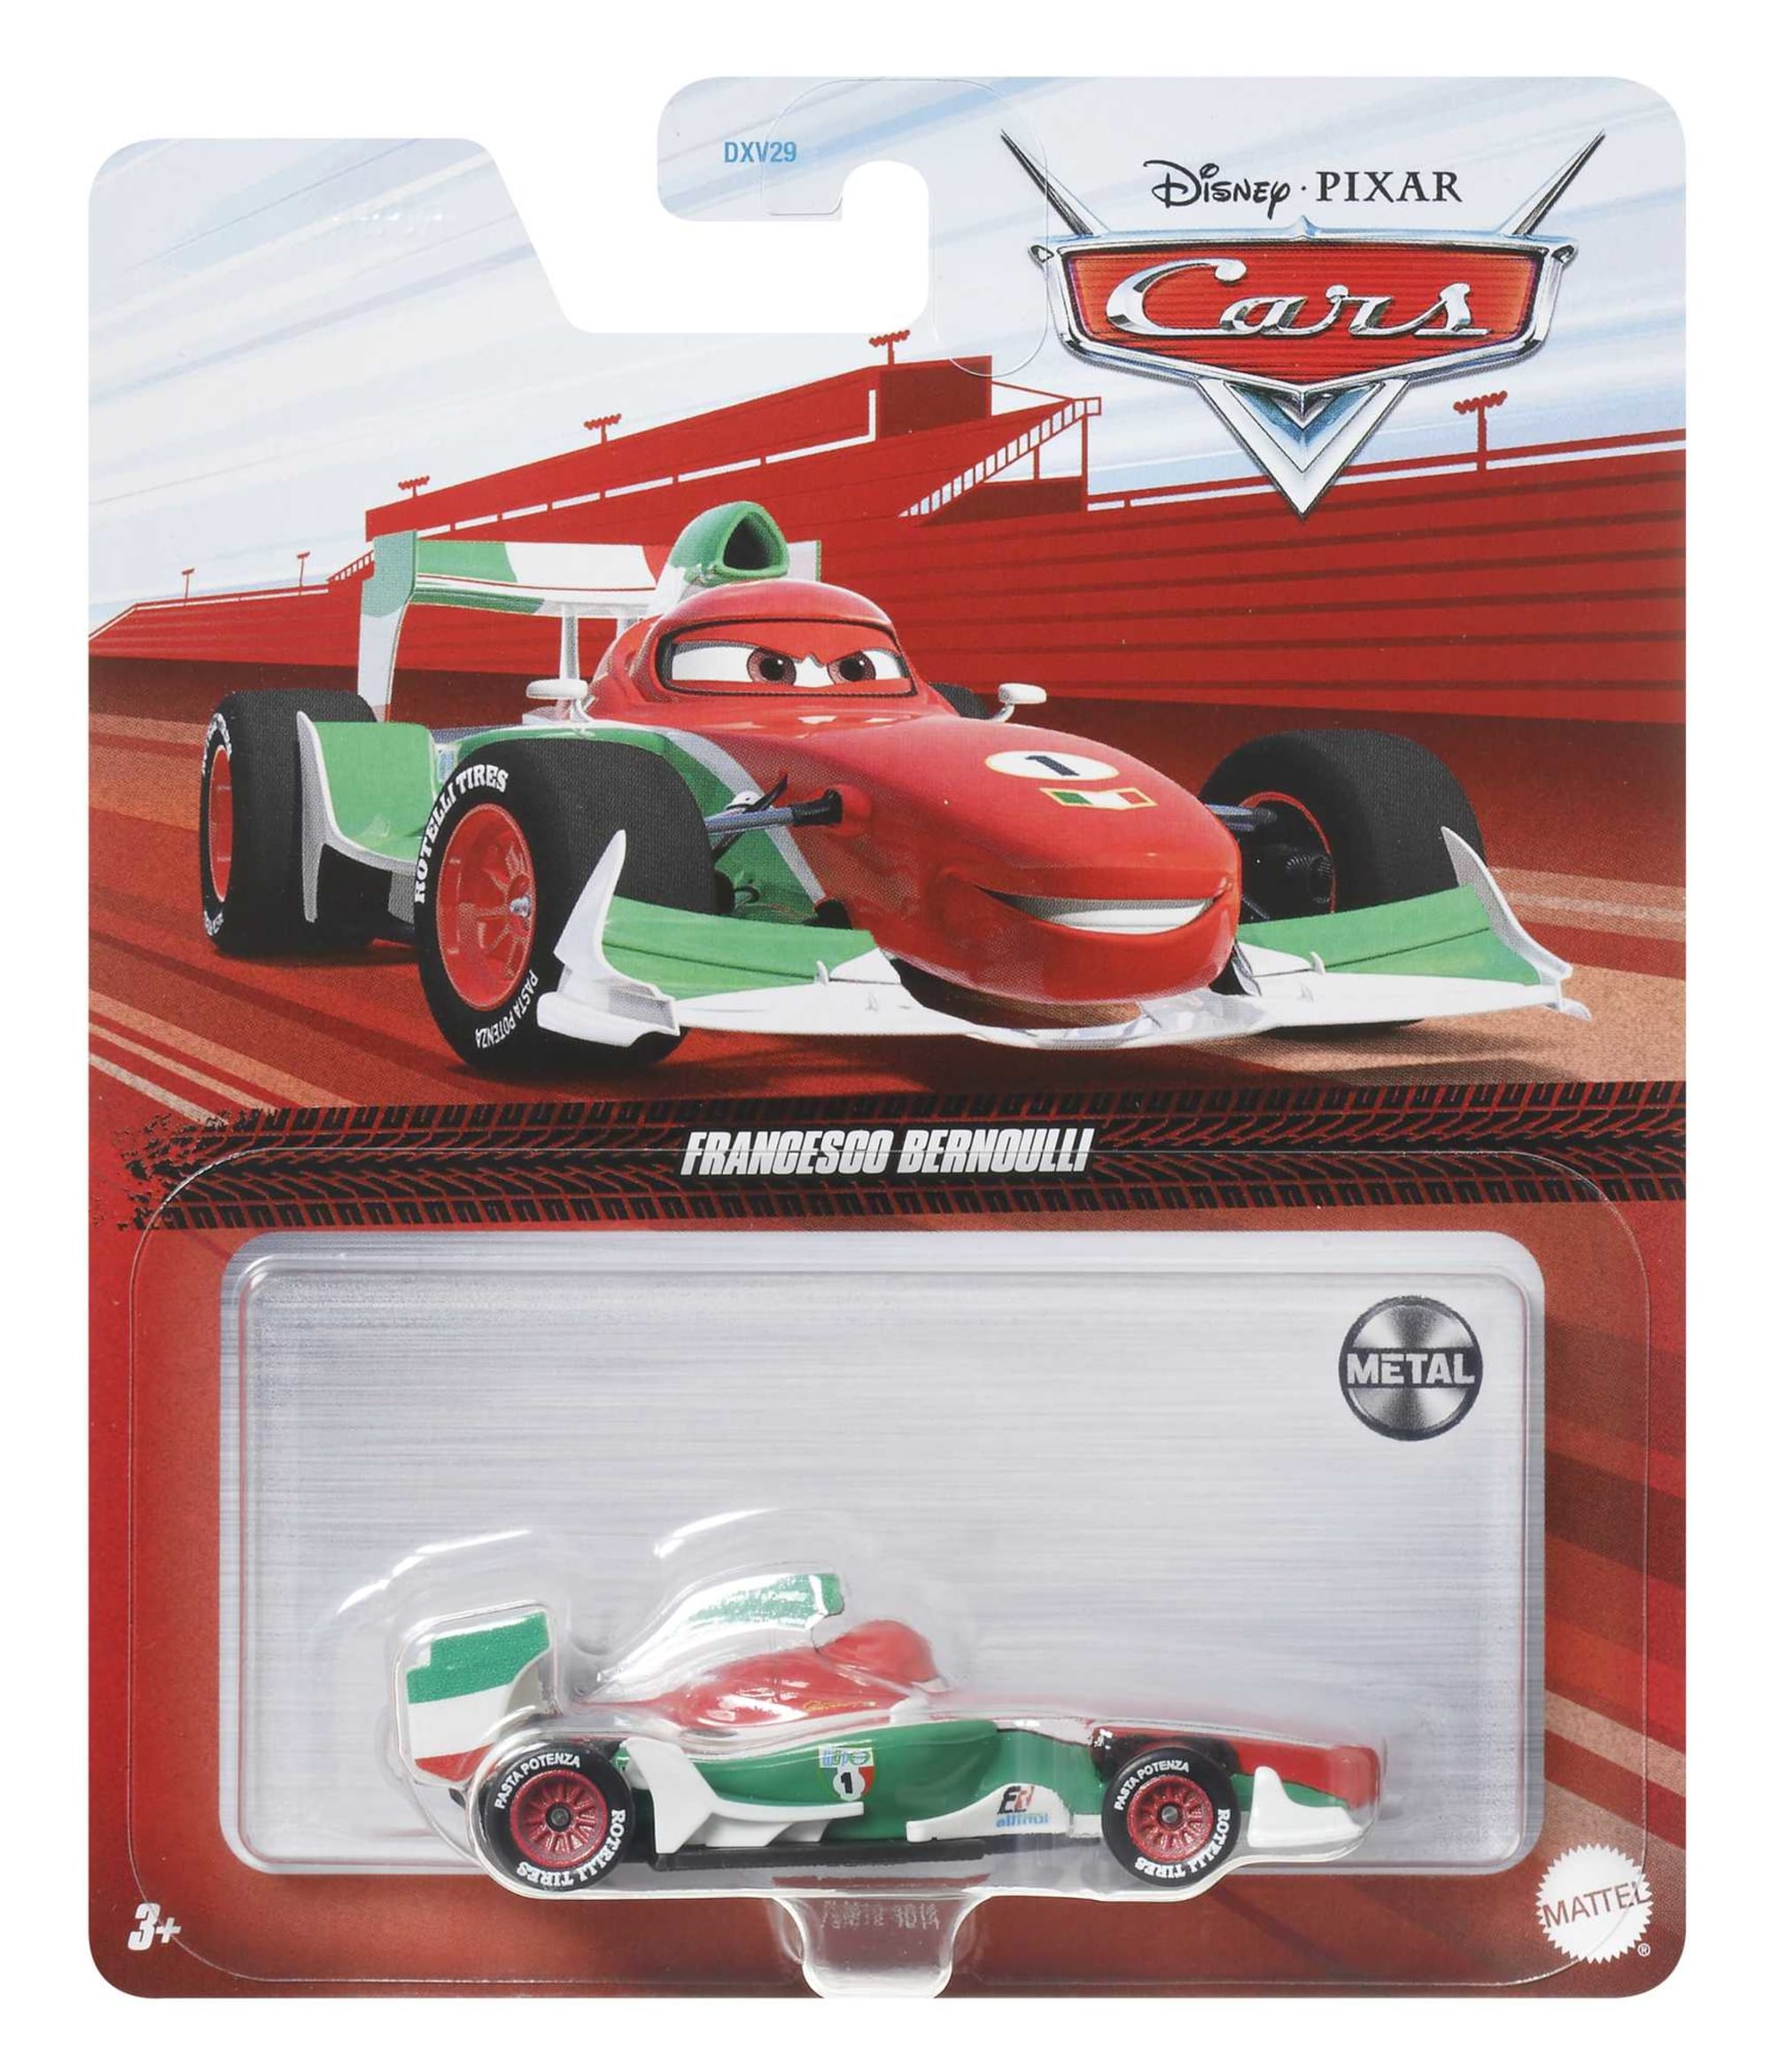 Cars Disney y Pixar Vehículo de Juguete Francesco Bernoulli Escala 1:55